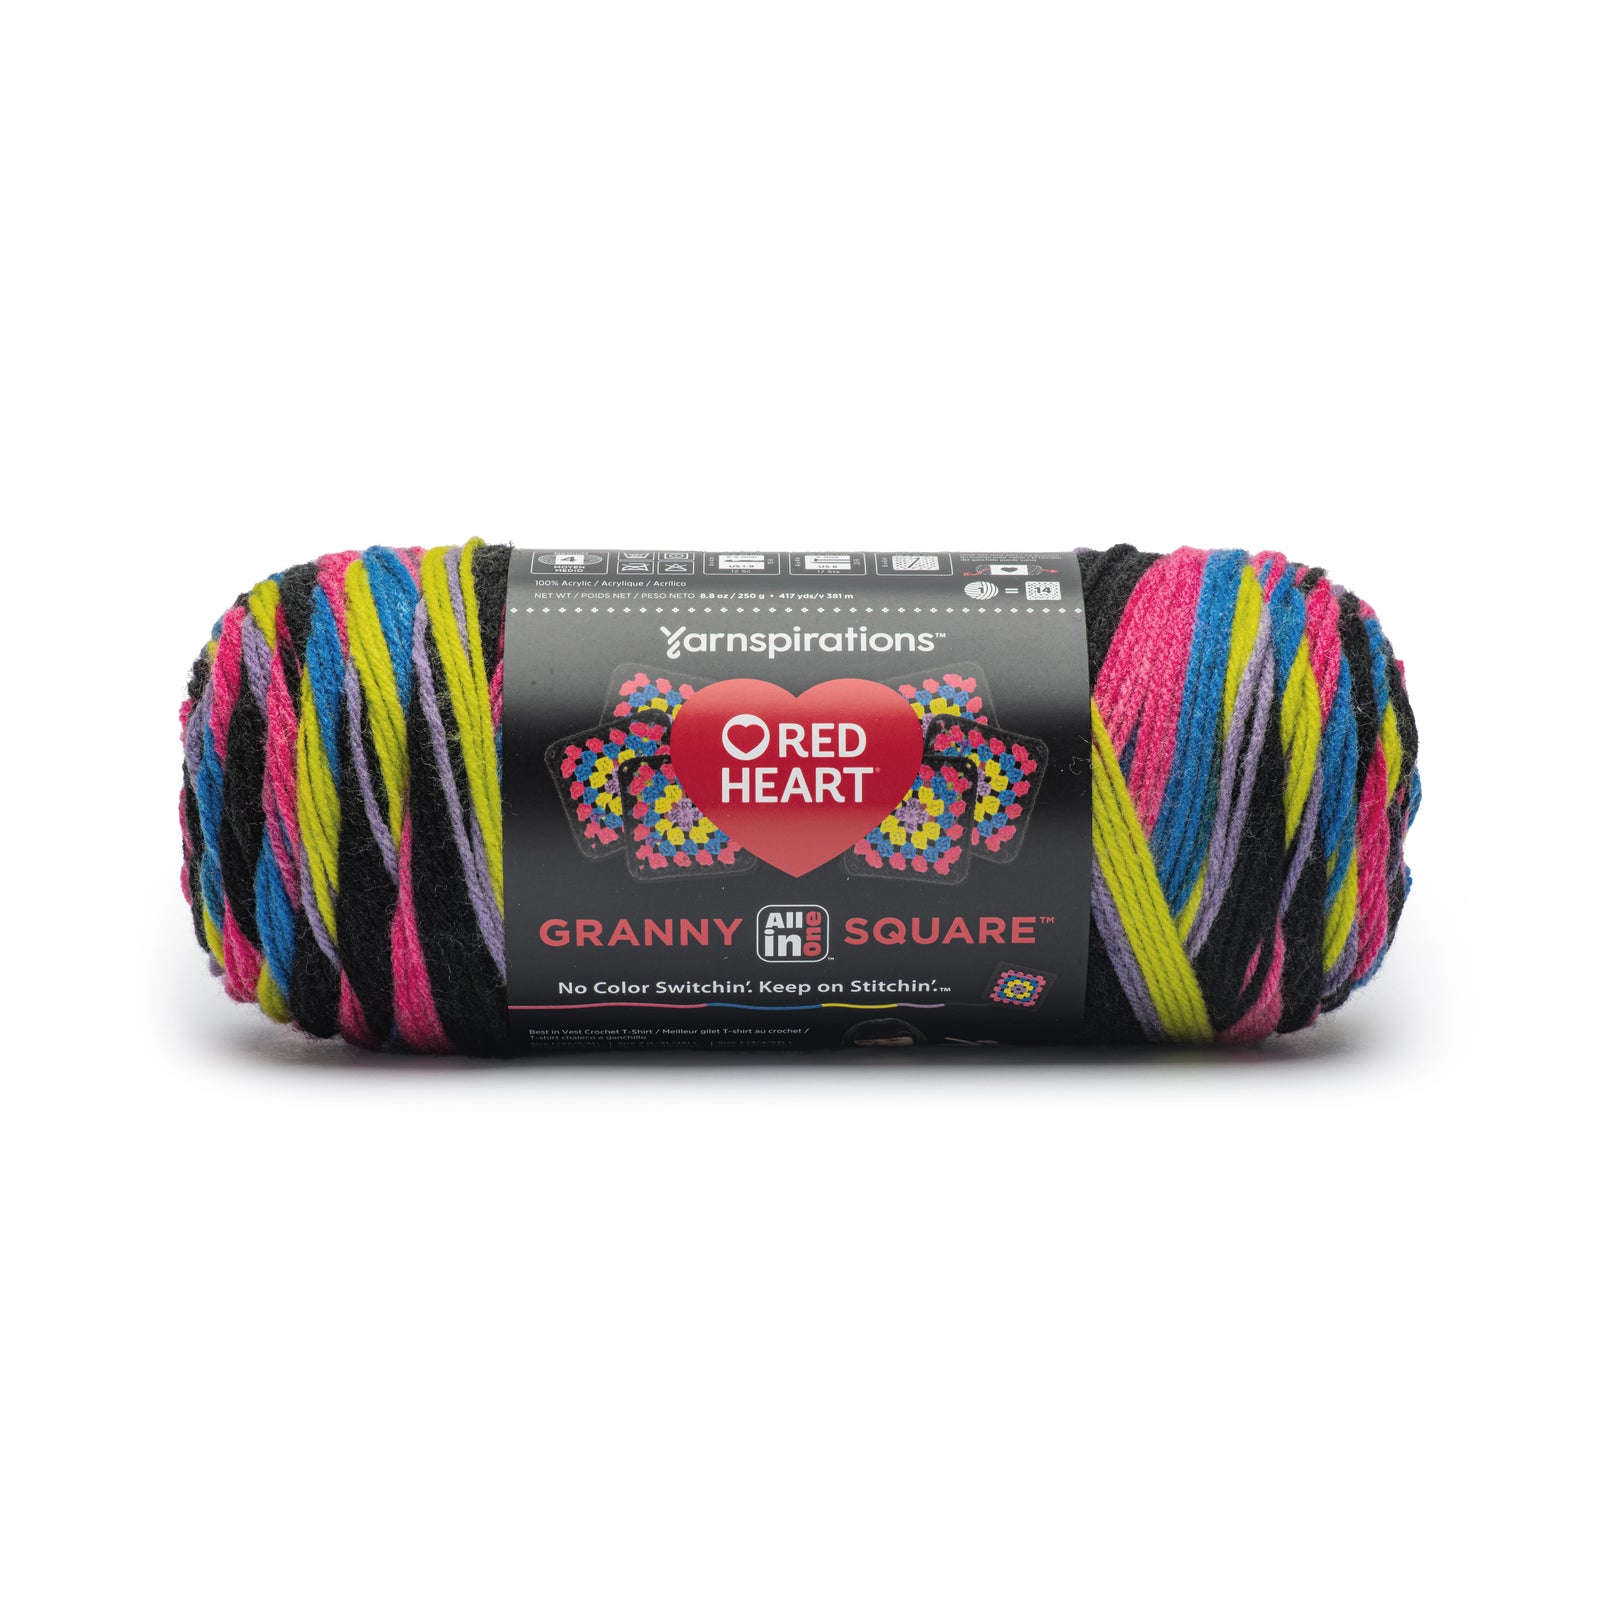 Red Heart All in One Granny Square Crochet Yarn in Black - Neon Lights | Size: 250g/8.8oz | Pattern: Crochet | by Yarnspirations